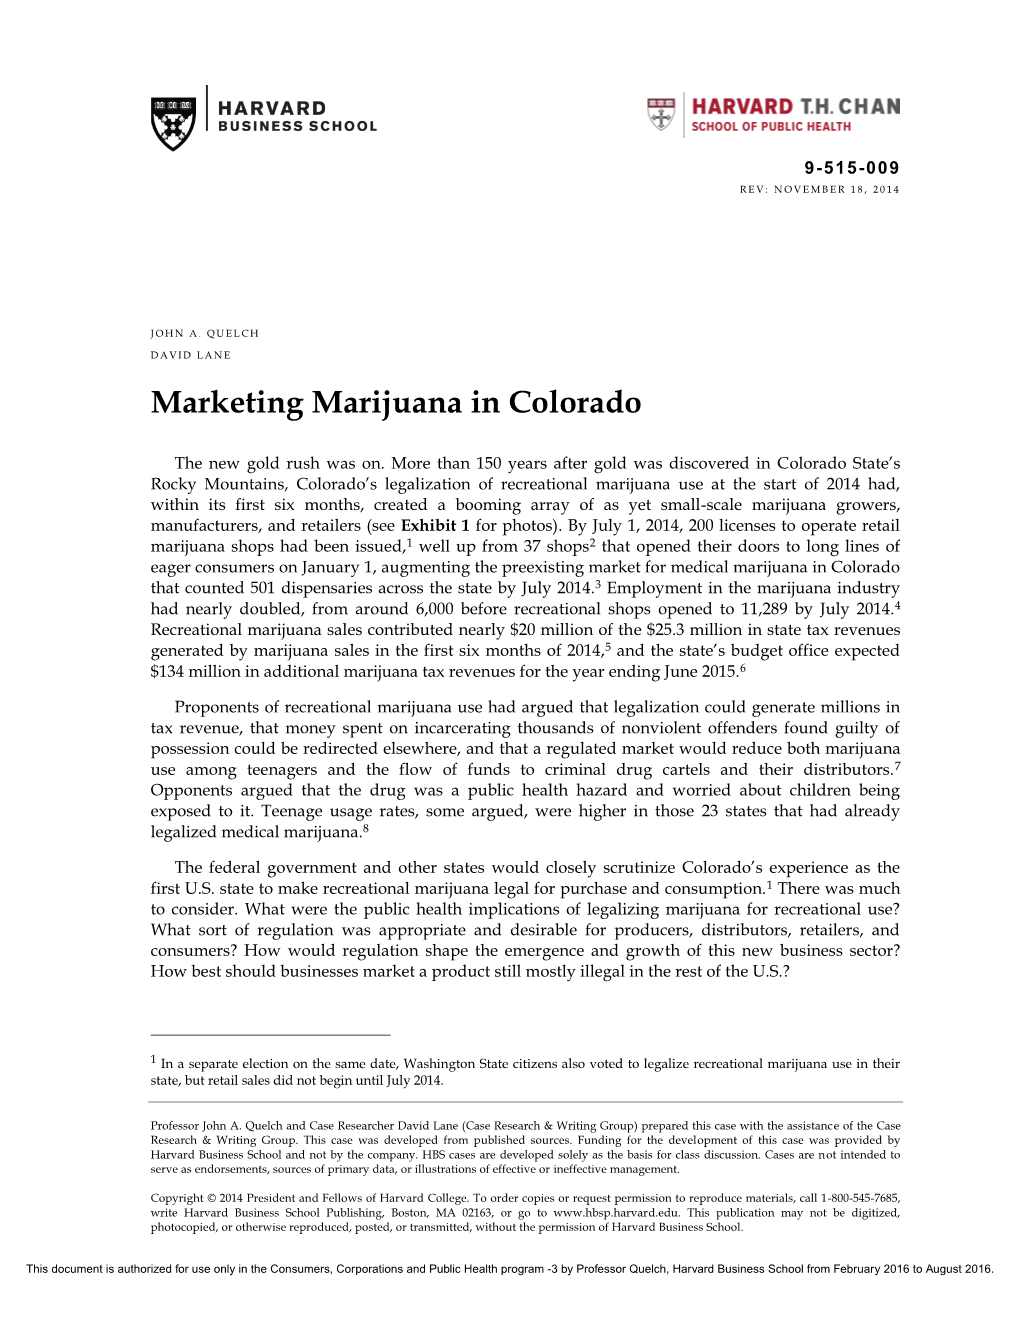 Marketing Marijuana in Colorado